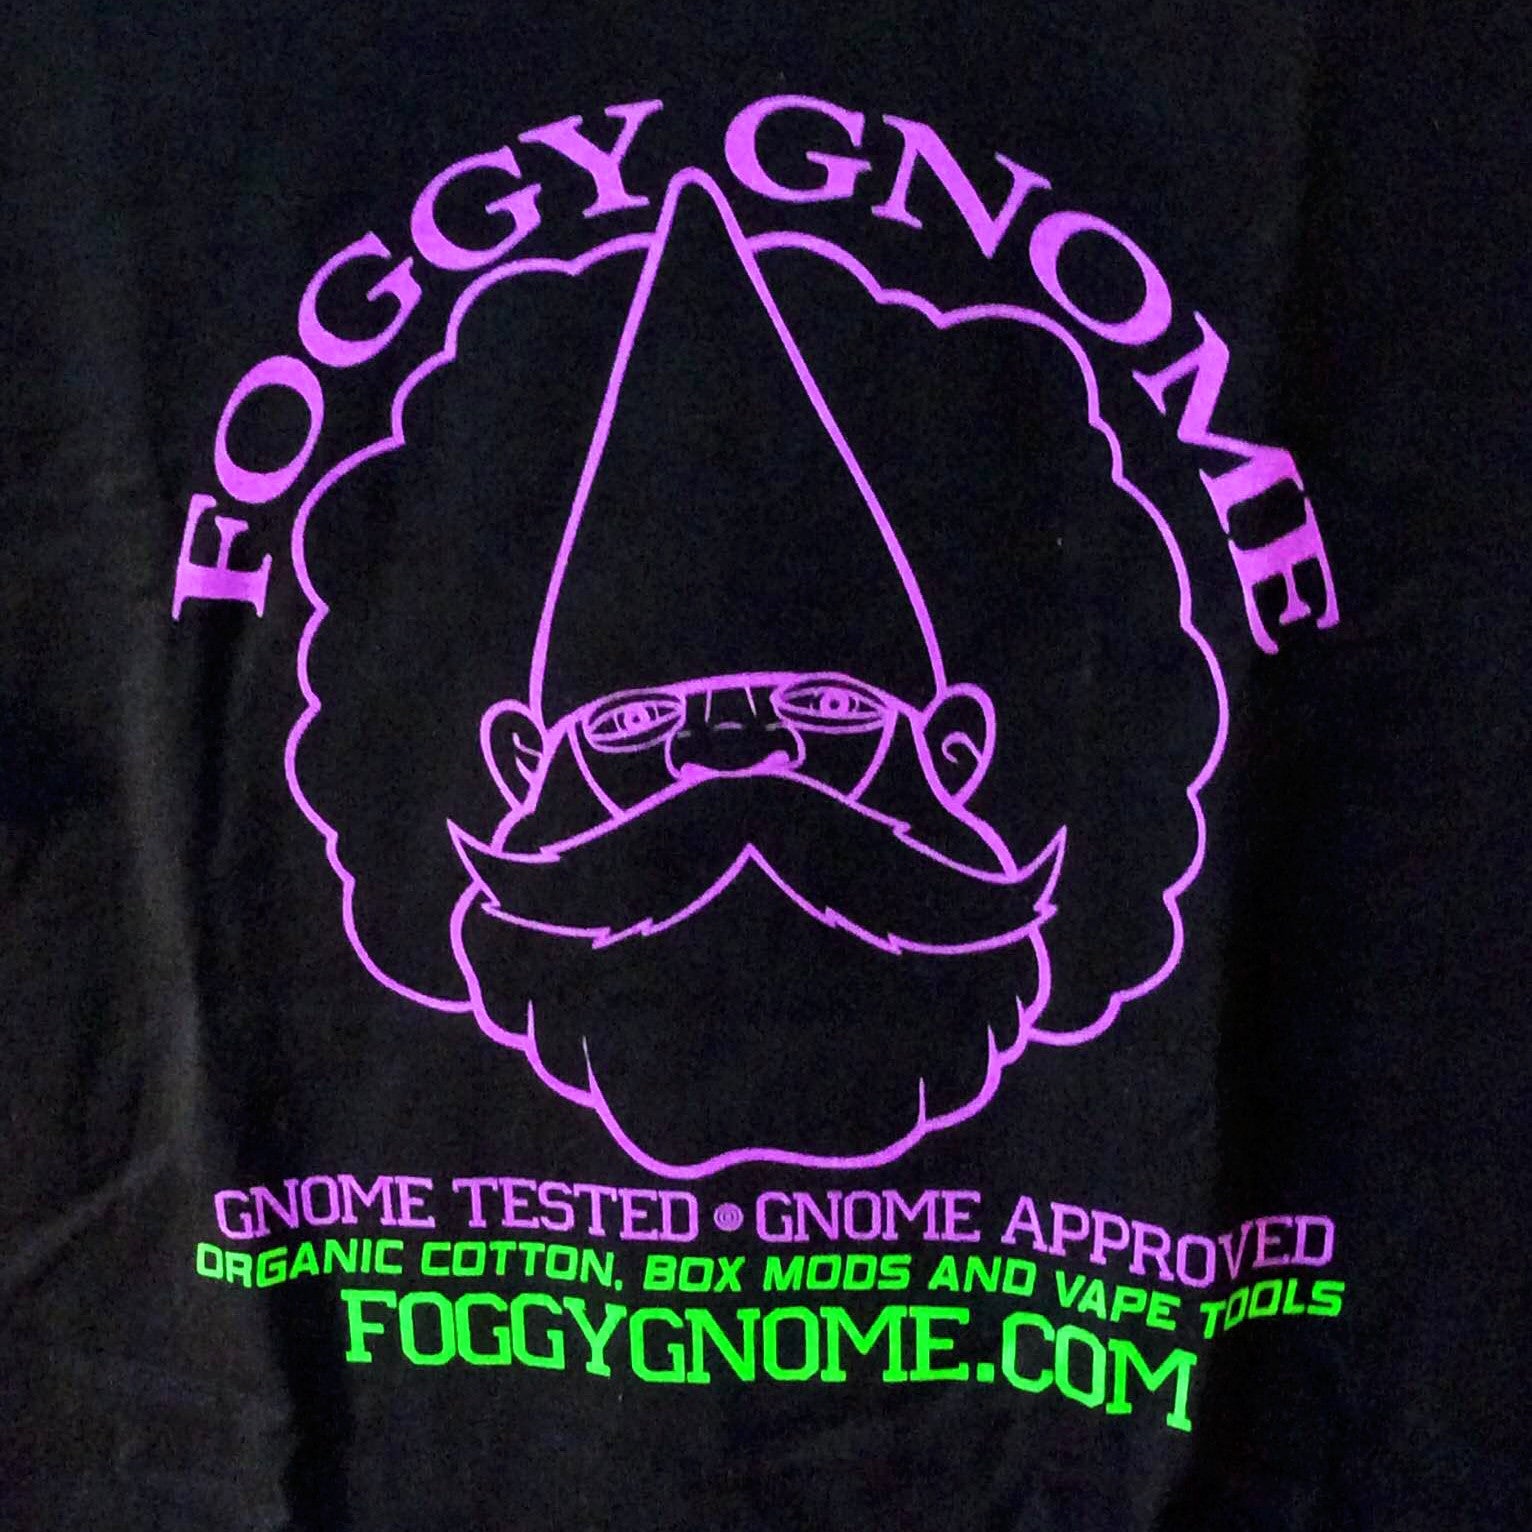 OFFICIAL FOGGY GNOME / FOGGBOXX T-SHIRT